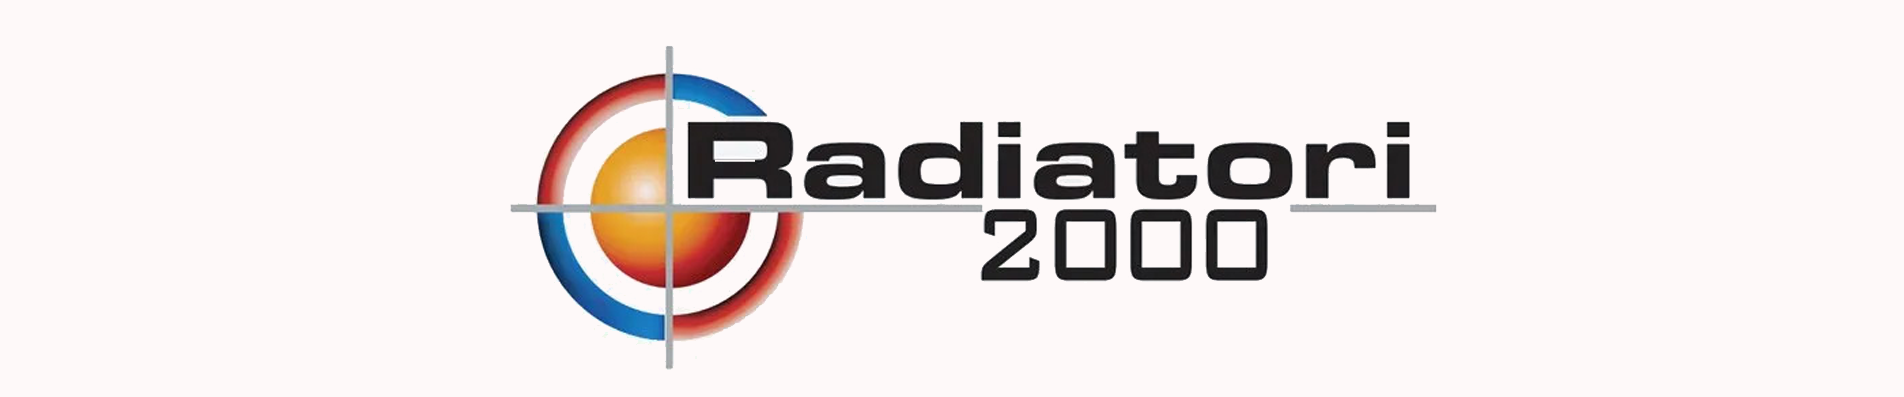 radiatori-2000